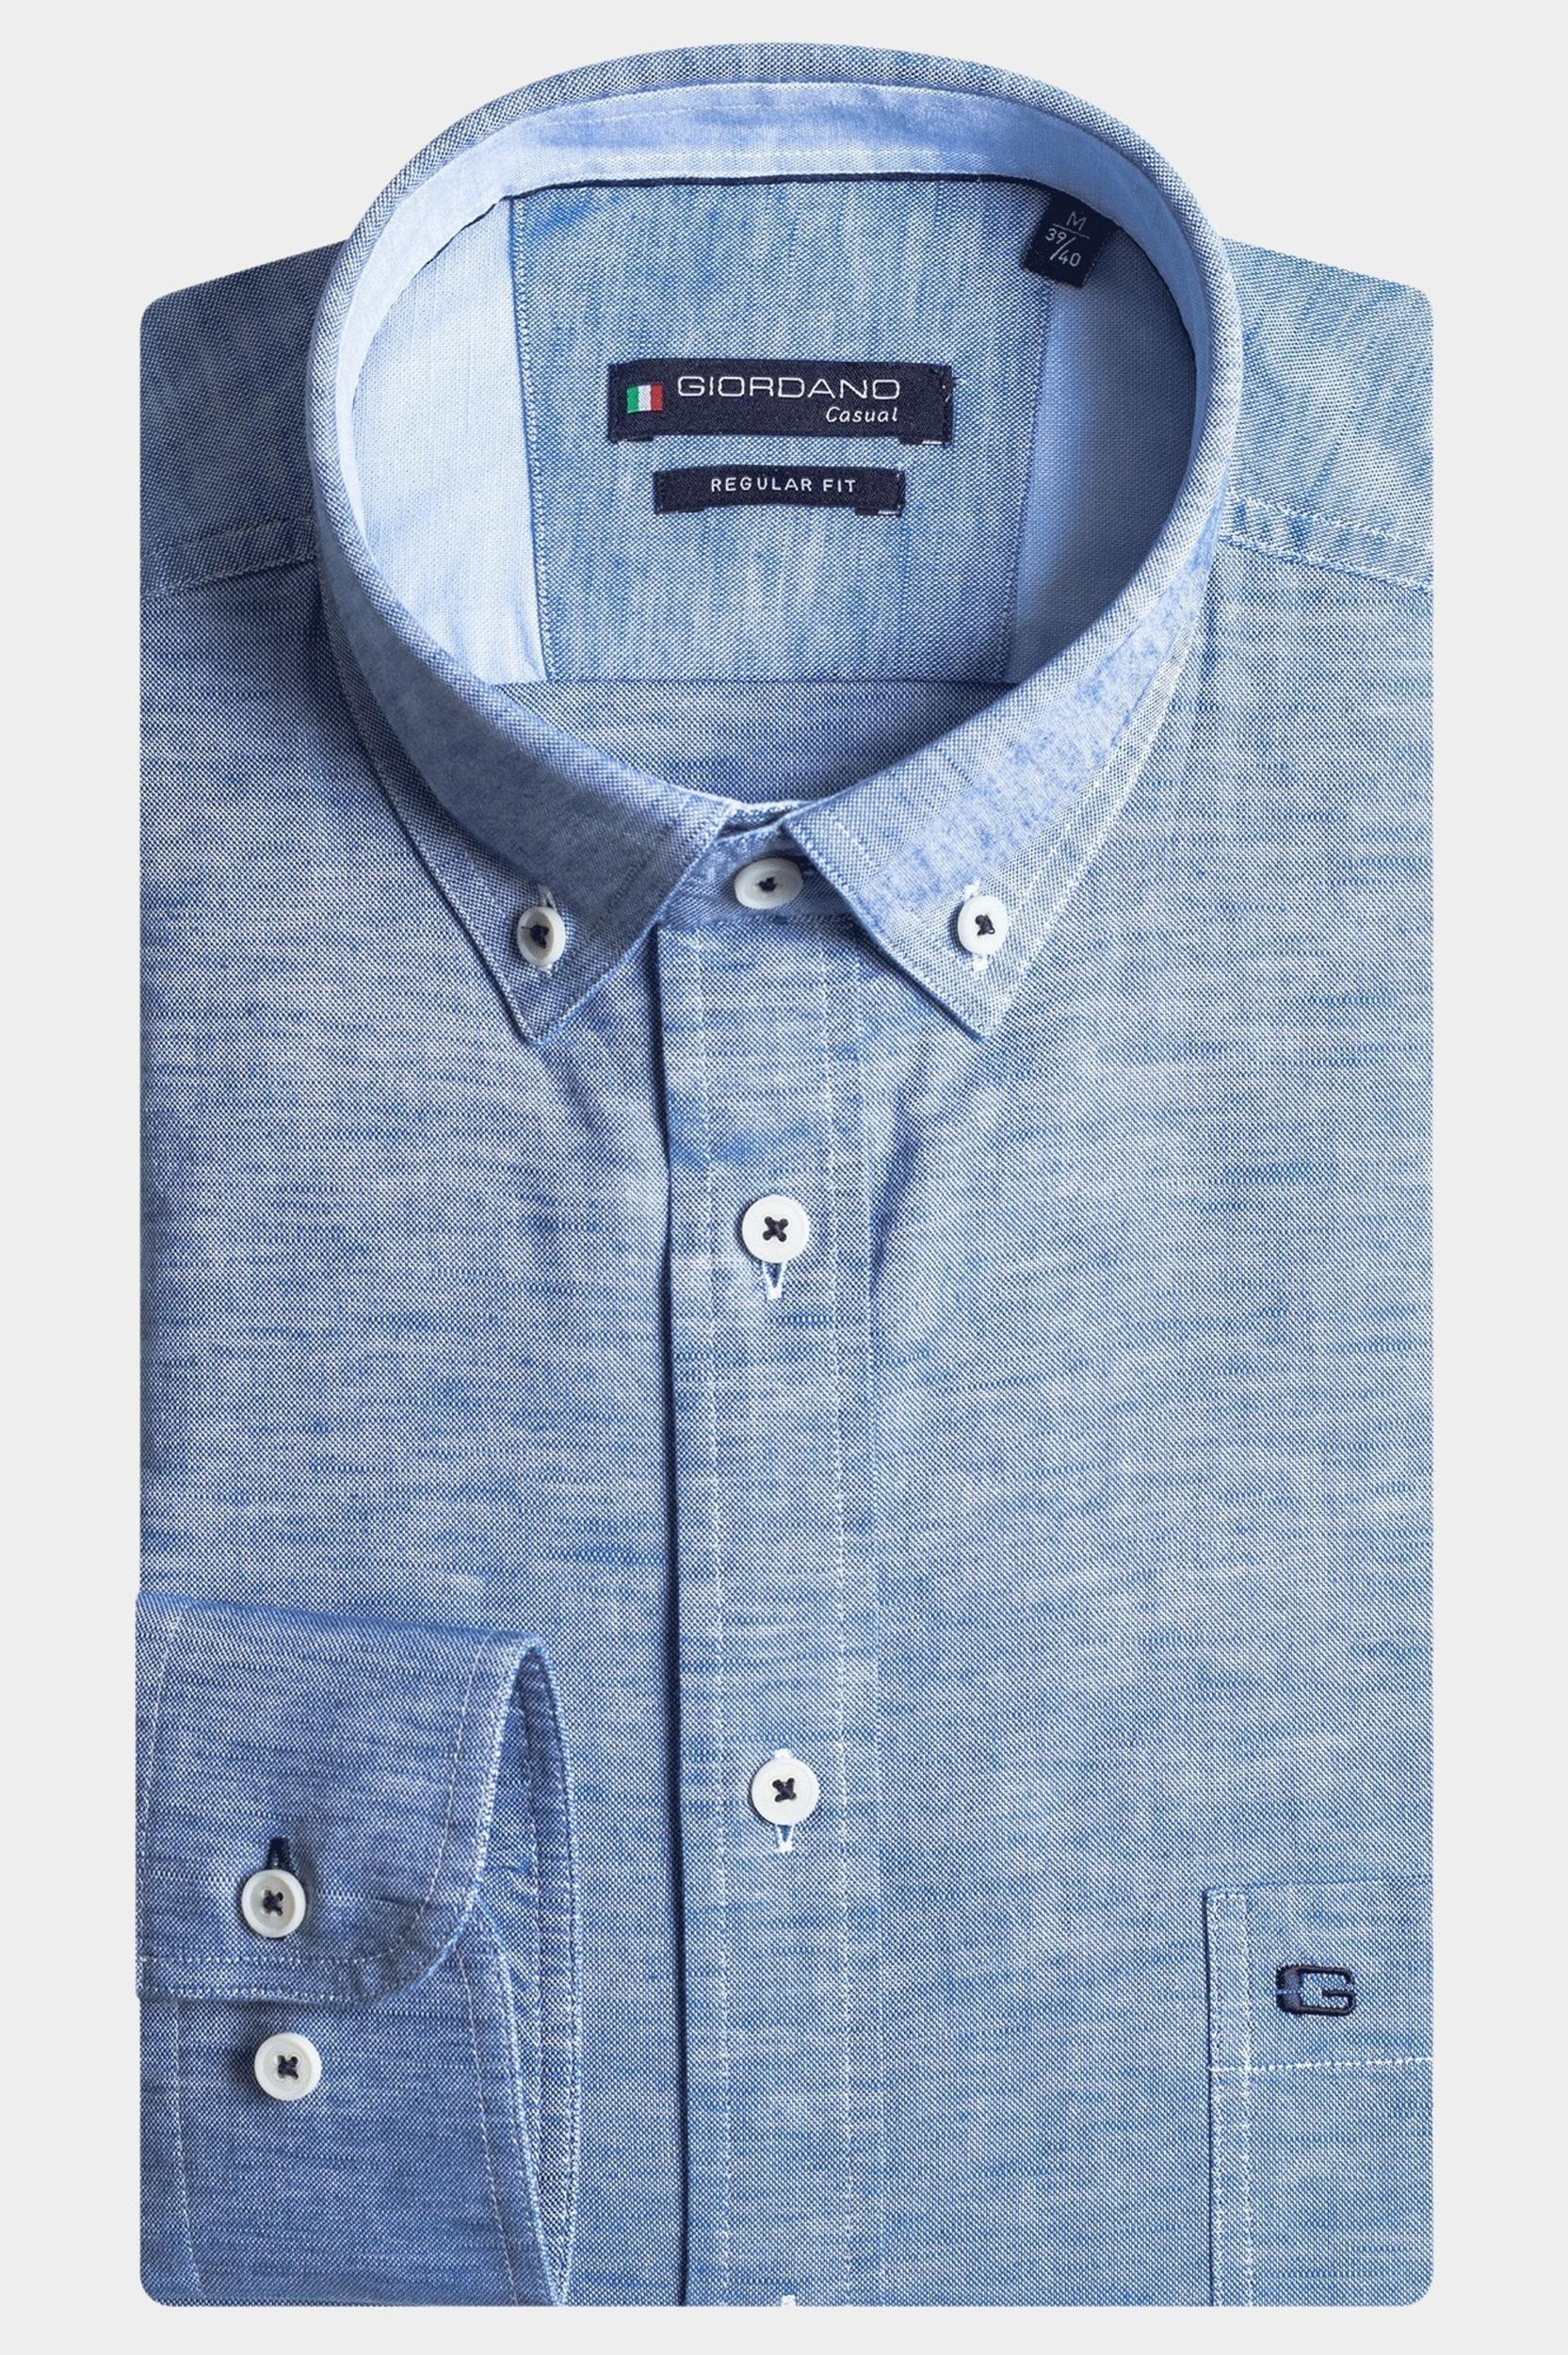 Giordano Casual hemd lange mouw Blauw Ivy Solid Hemp Yarn Fabric 417001/63